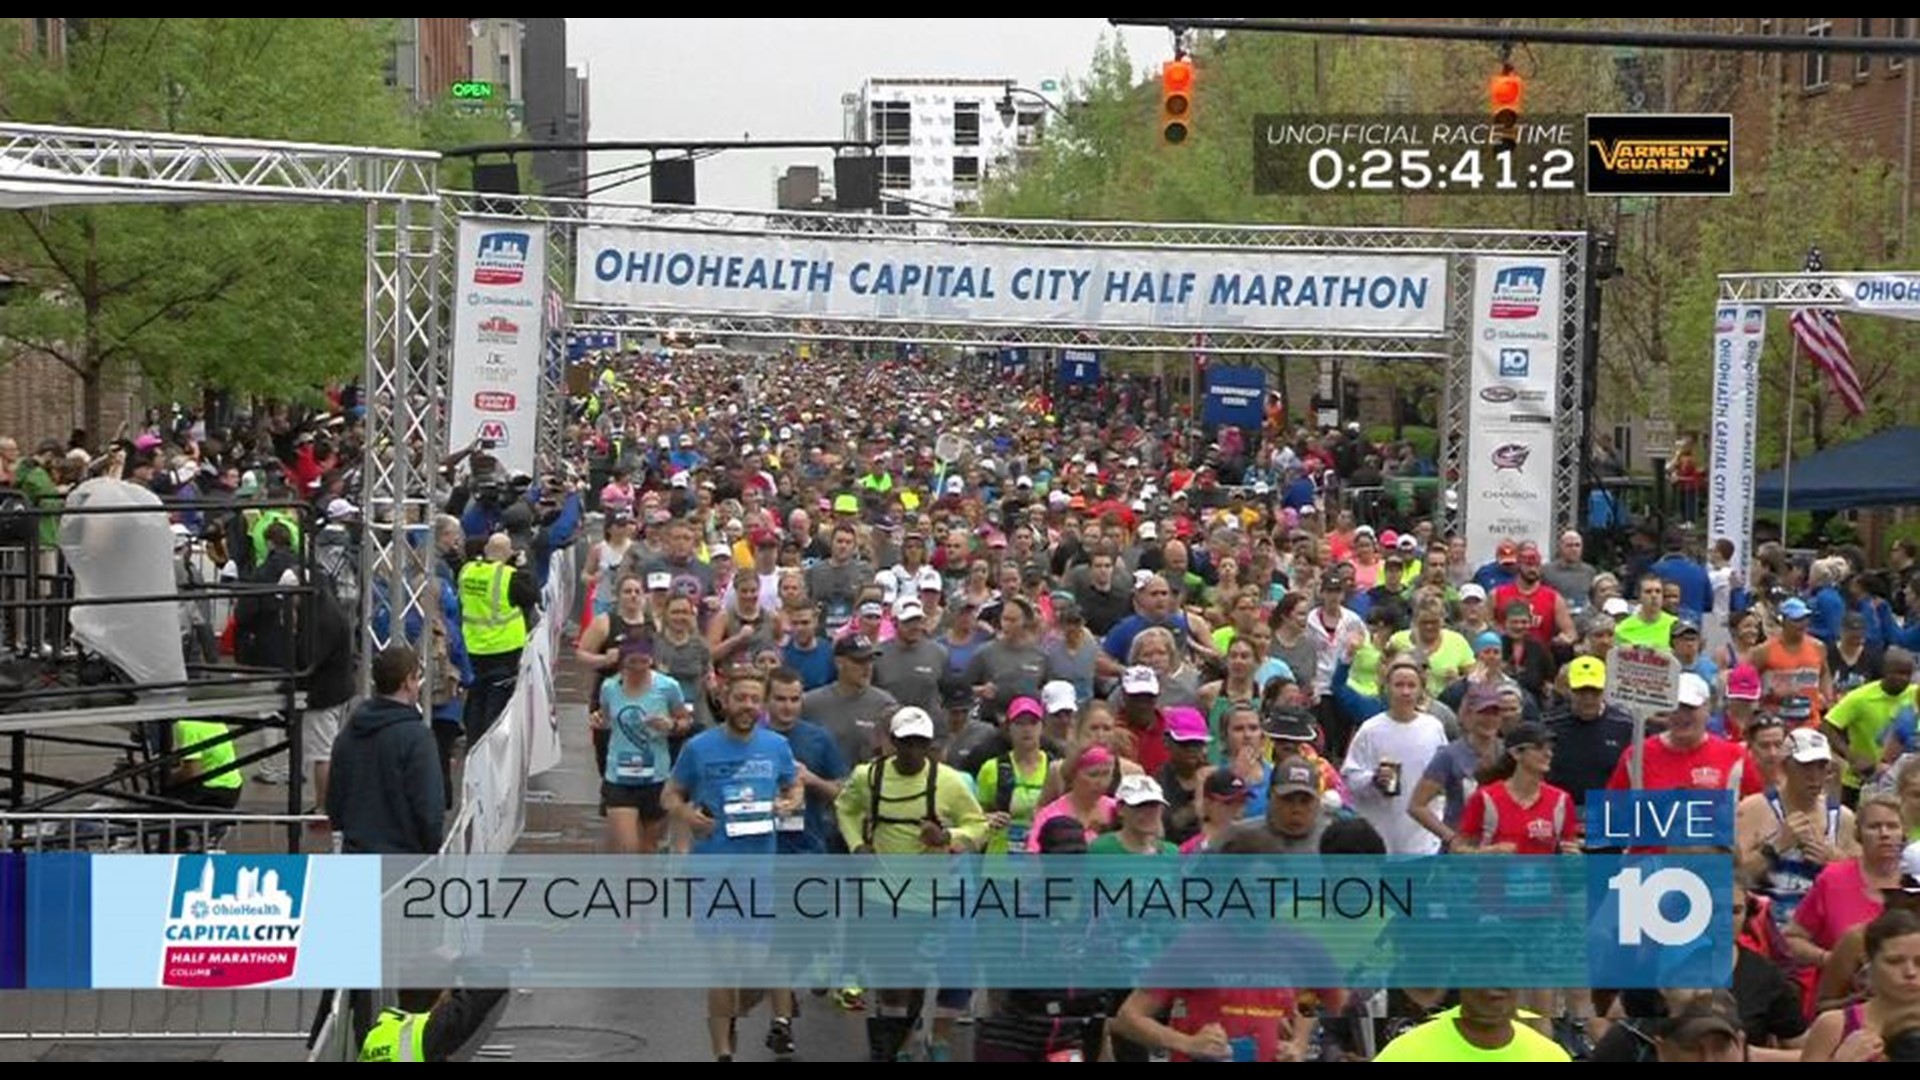 download cap city half marathon